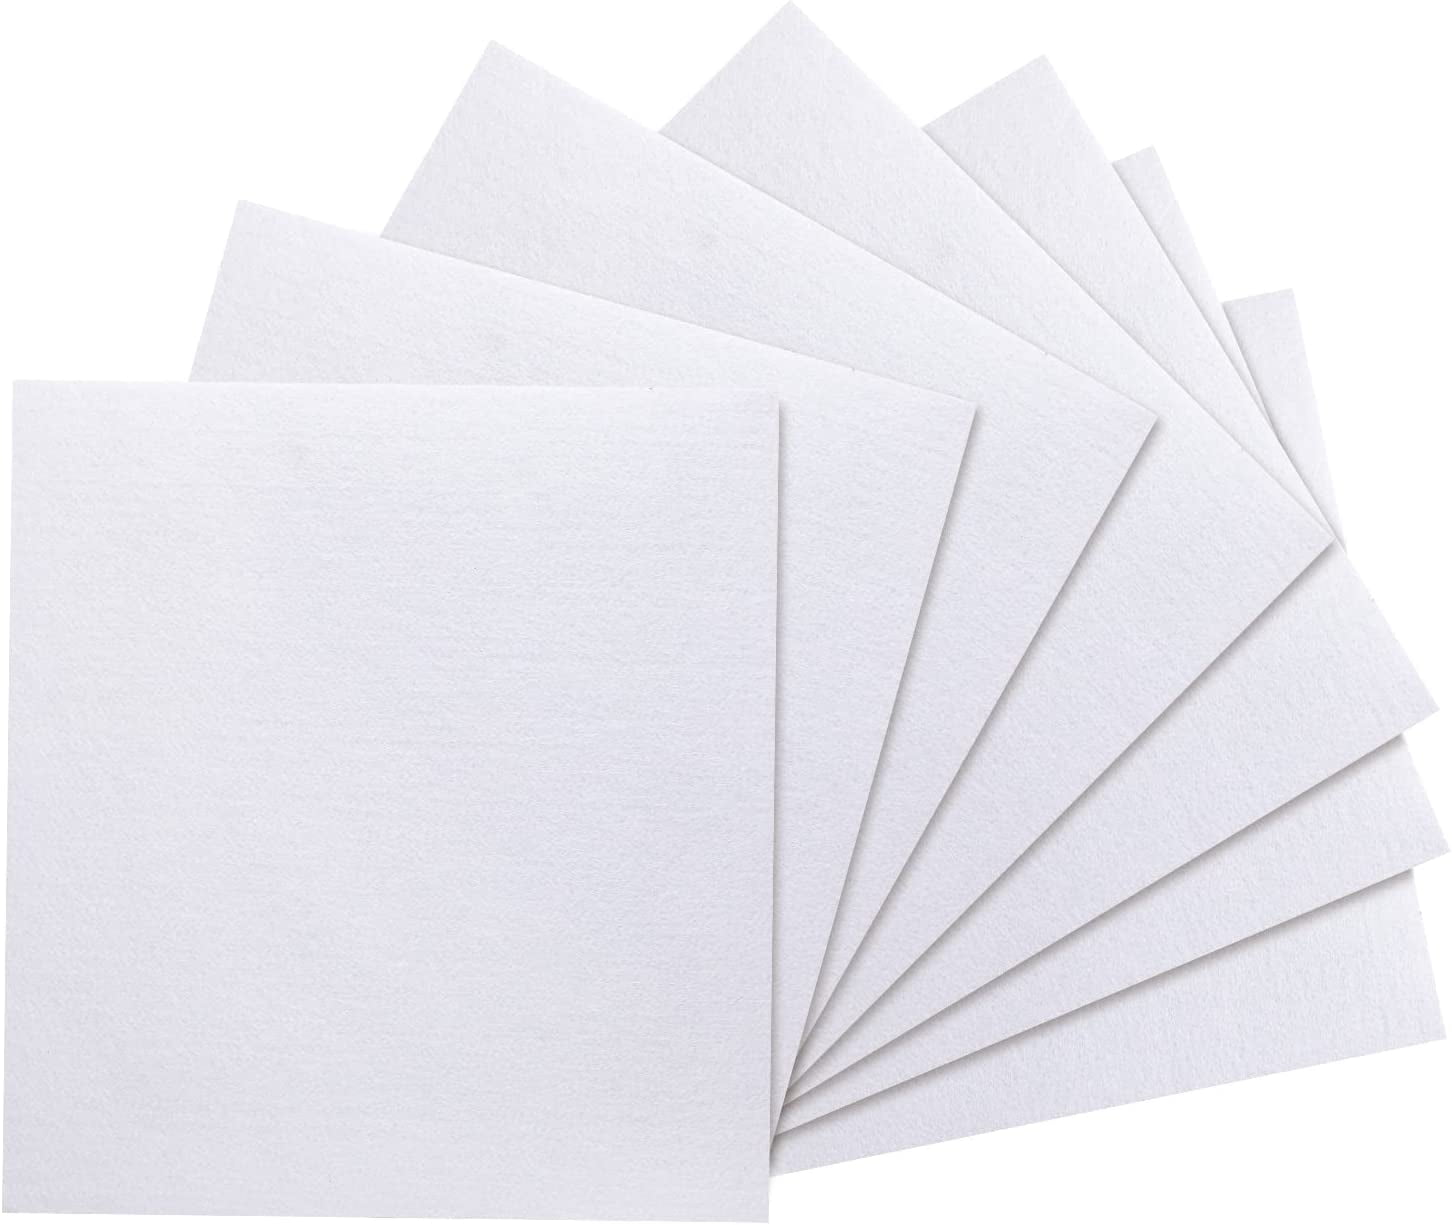 Thick Felt Sheet, Felt Fabric Sheet (36x44 Inch), Decoration felt Sheet,  Activity Felt Sheet, Color White